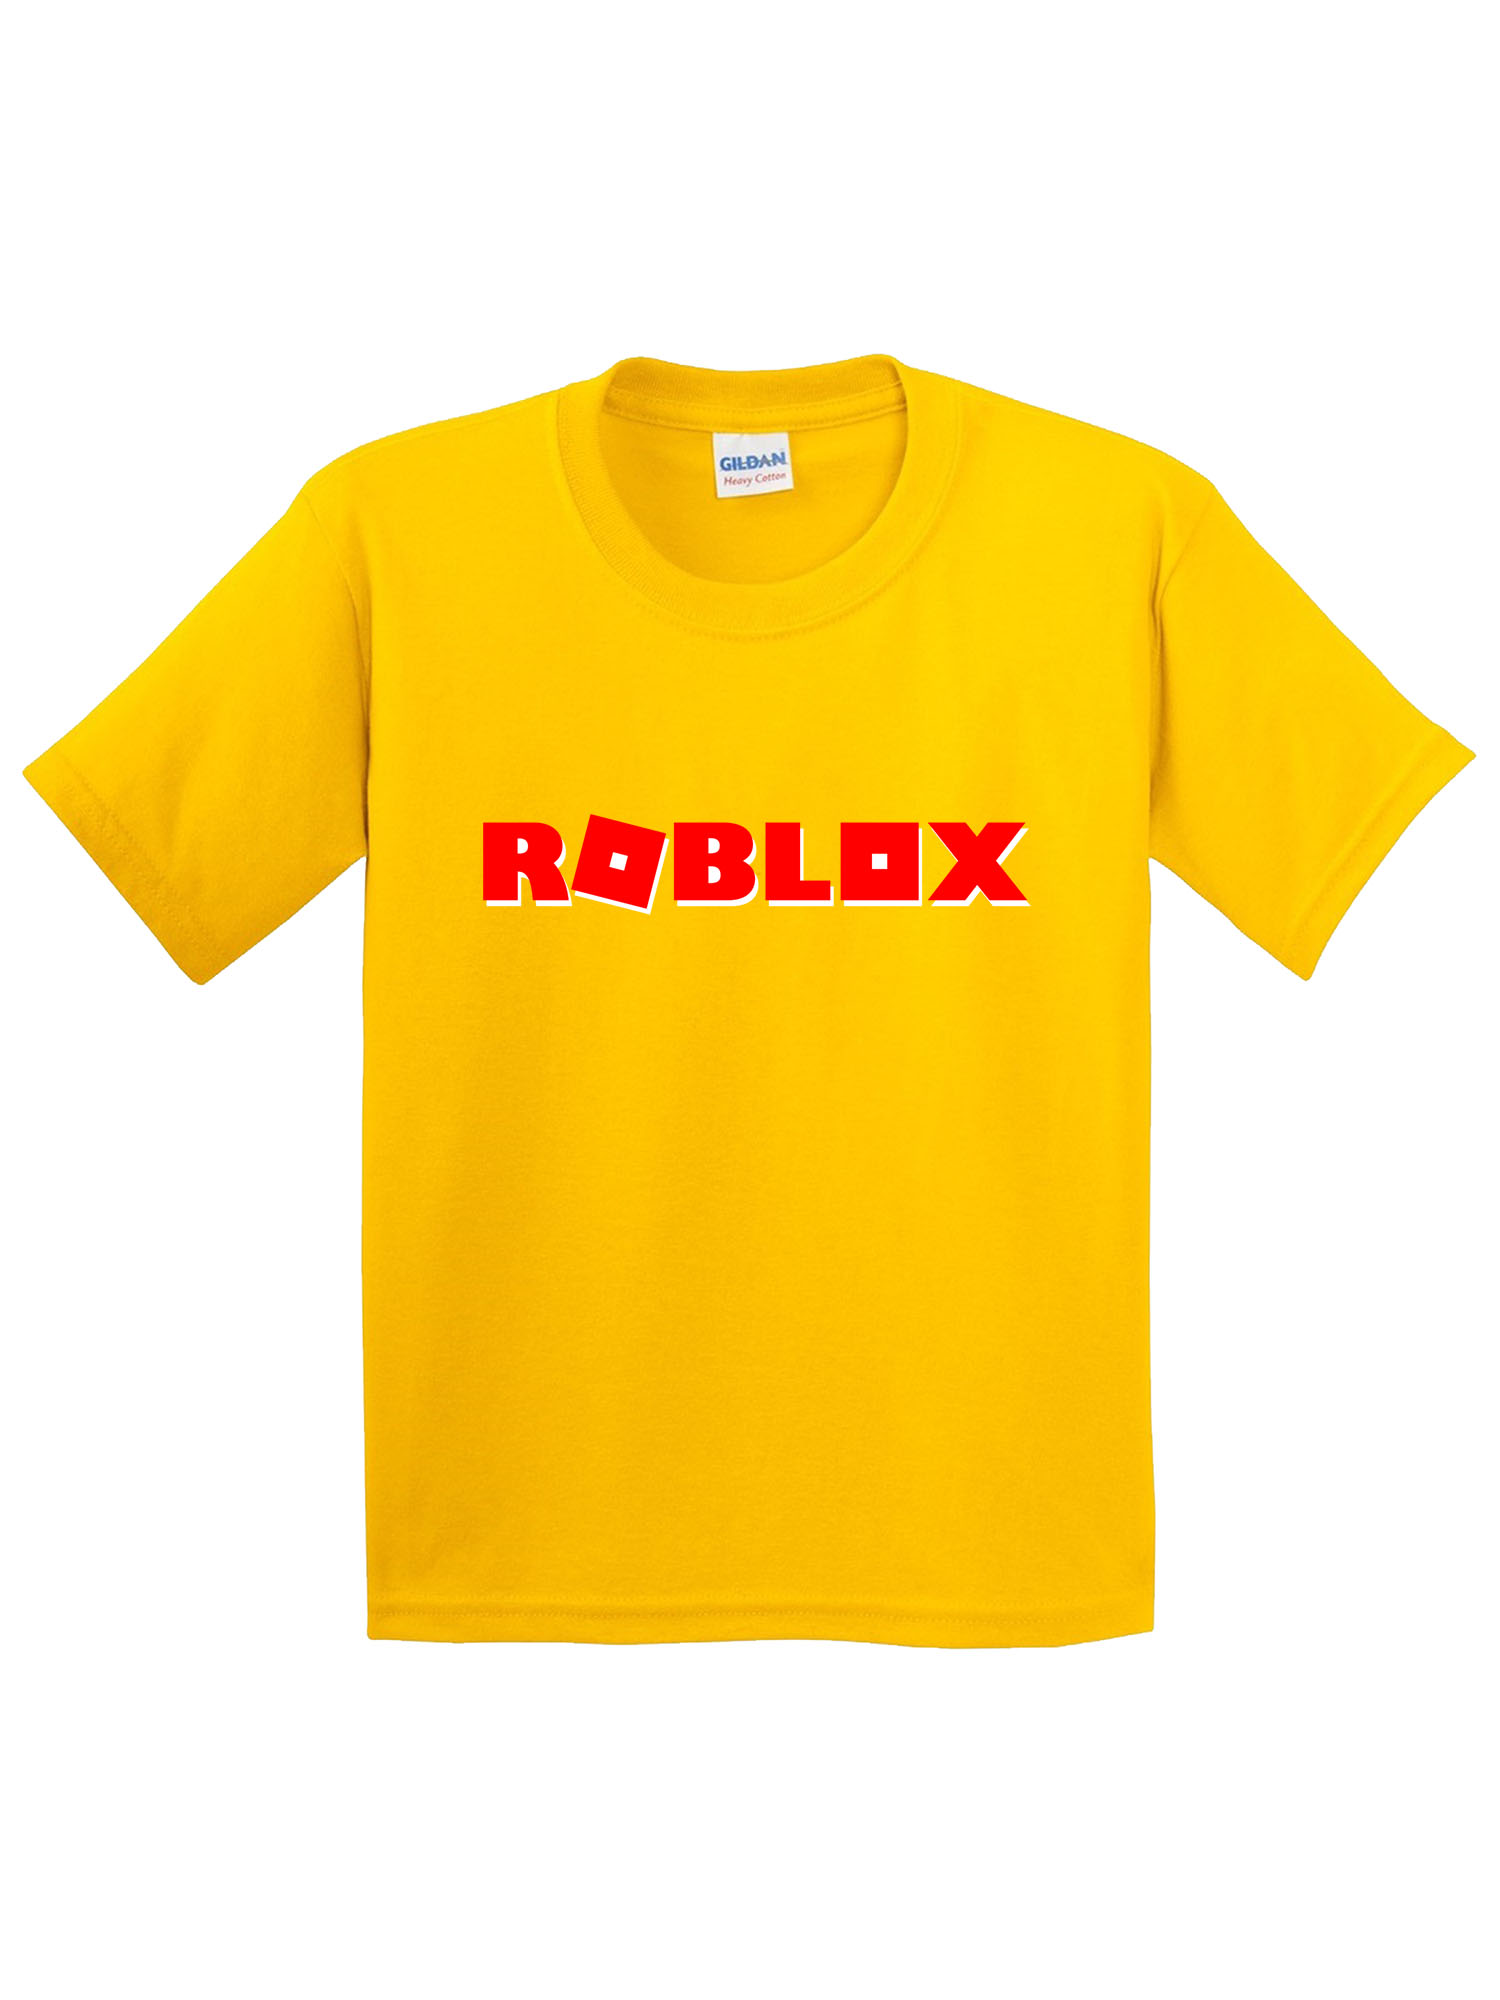 New Way New Way 922 Youth T Shirt Roblox Logo Game Filled Small Daisy Yellow Walmart Com Walmart Com - free roblox logo t shirt